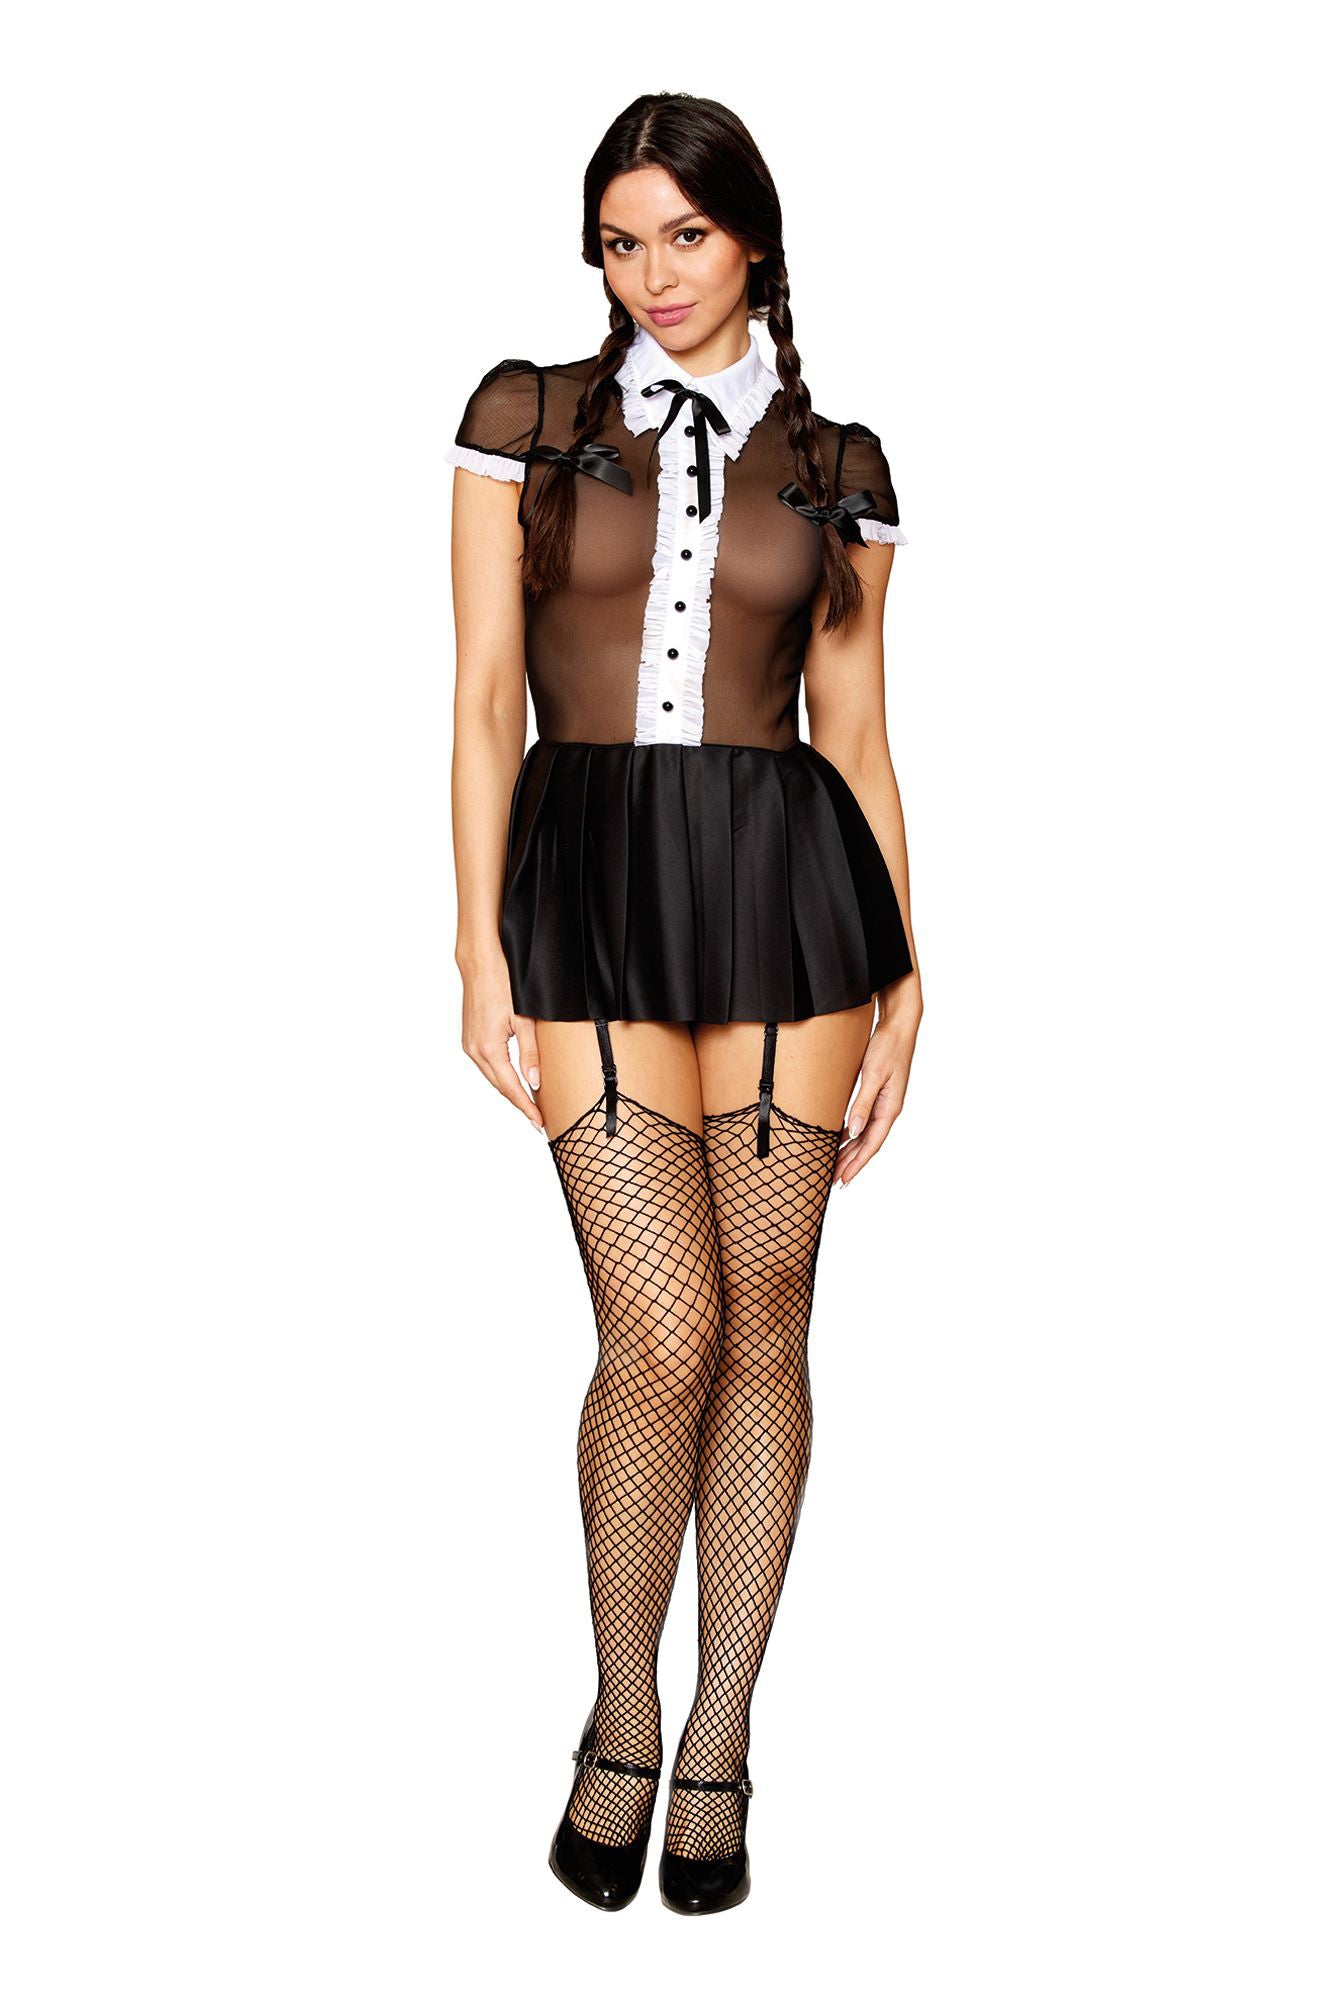 Gothic School Girl - Miss Behavin - One Size -  Black DG-13303BLKOS